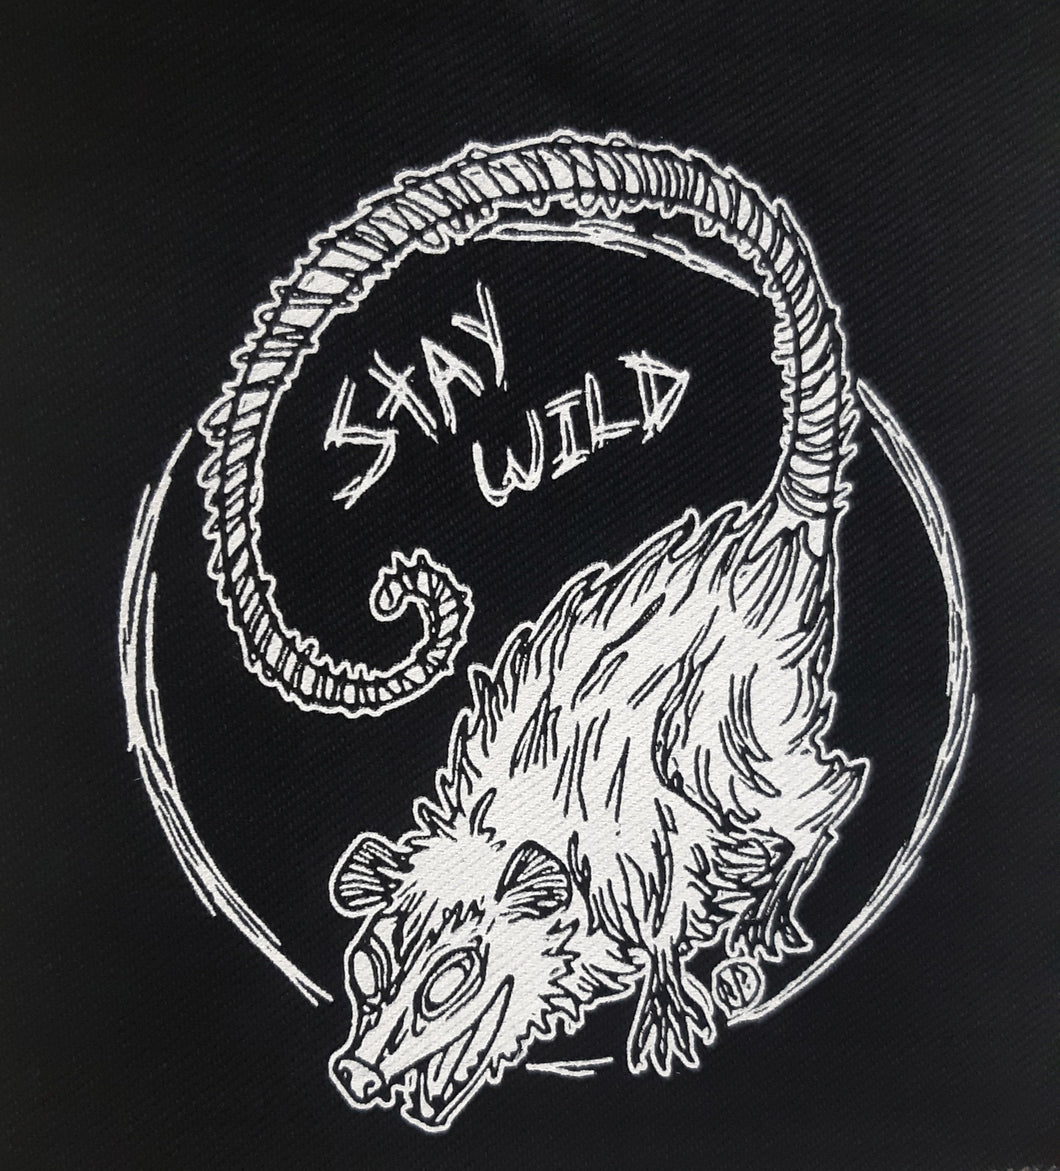 Wild trash possum patch - Stay wild - Screen printing on black fabric